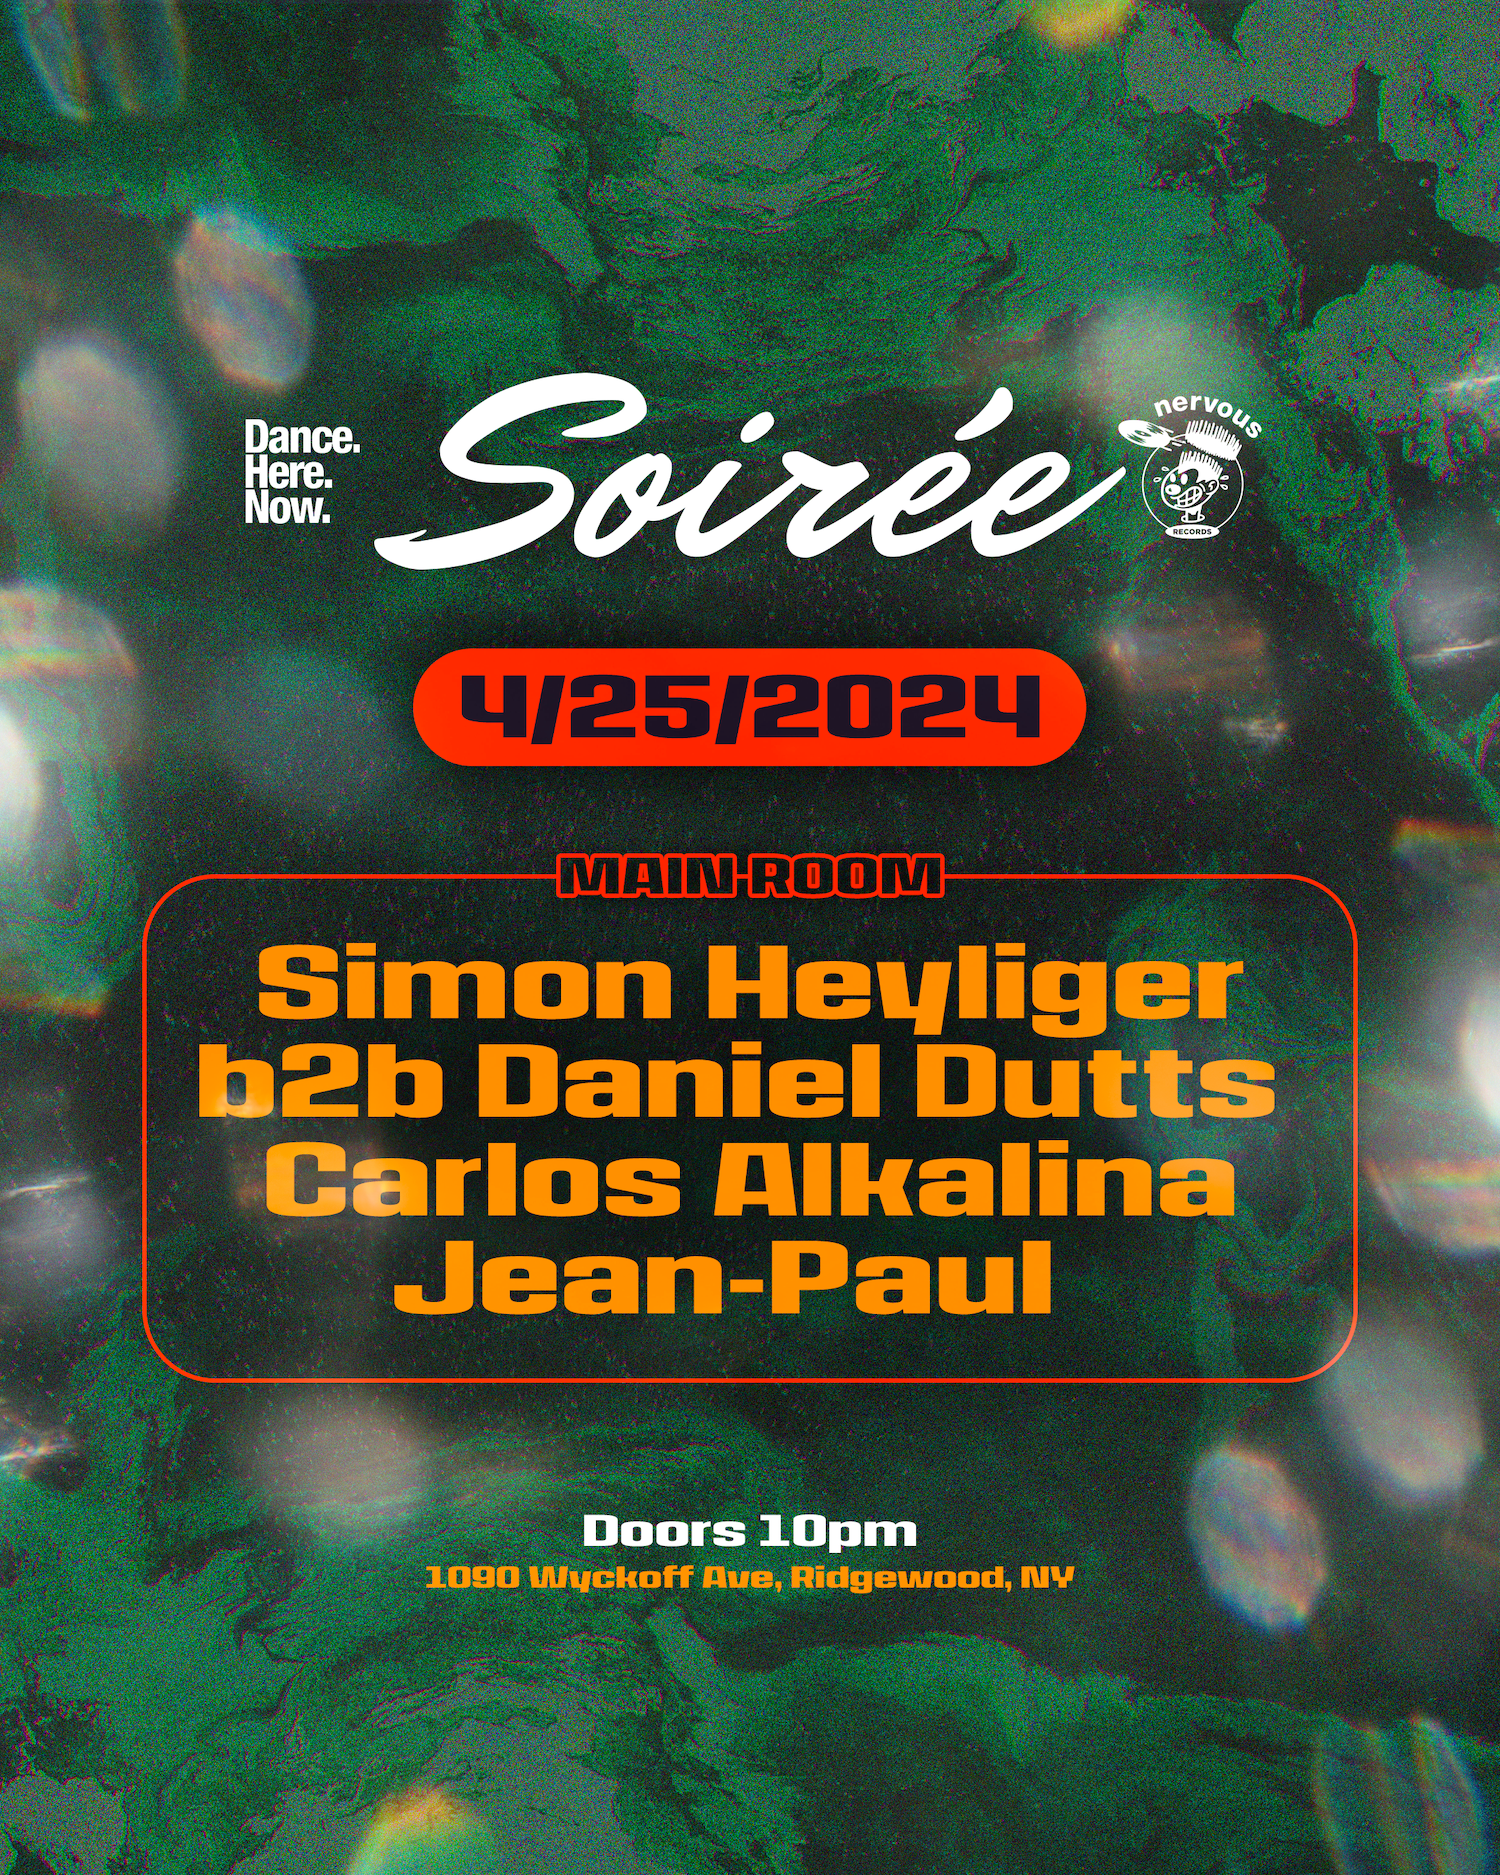 Soirée with Simon Heyliger b2b Daniel Dutts, Carlos Alkalina, Jean-Paul - Página trasera